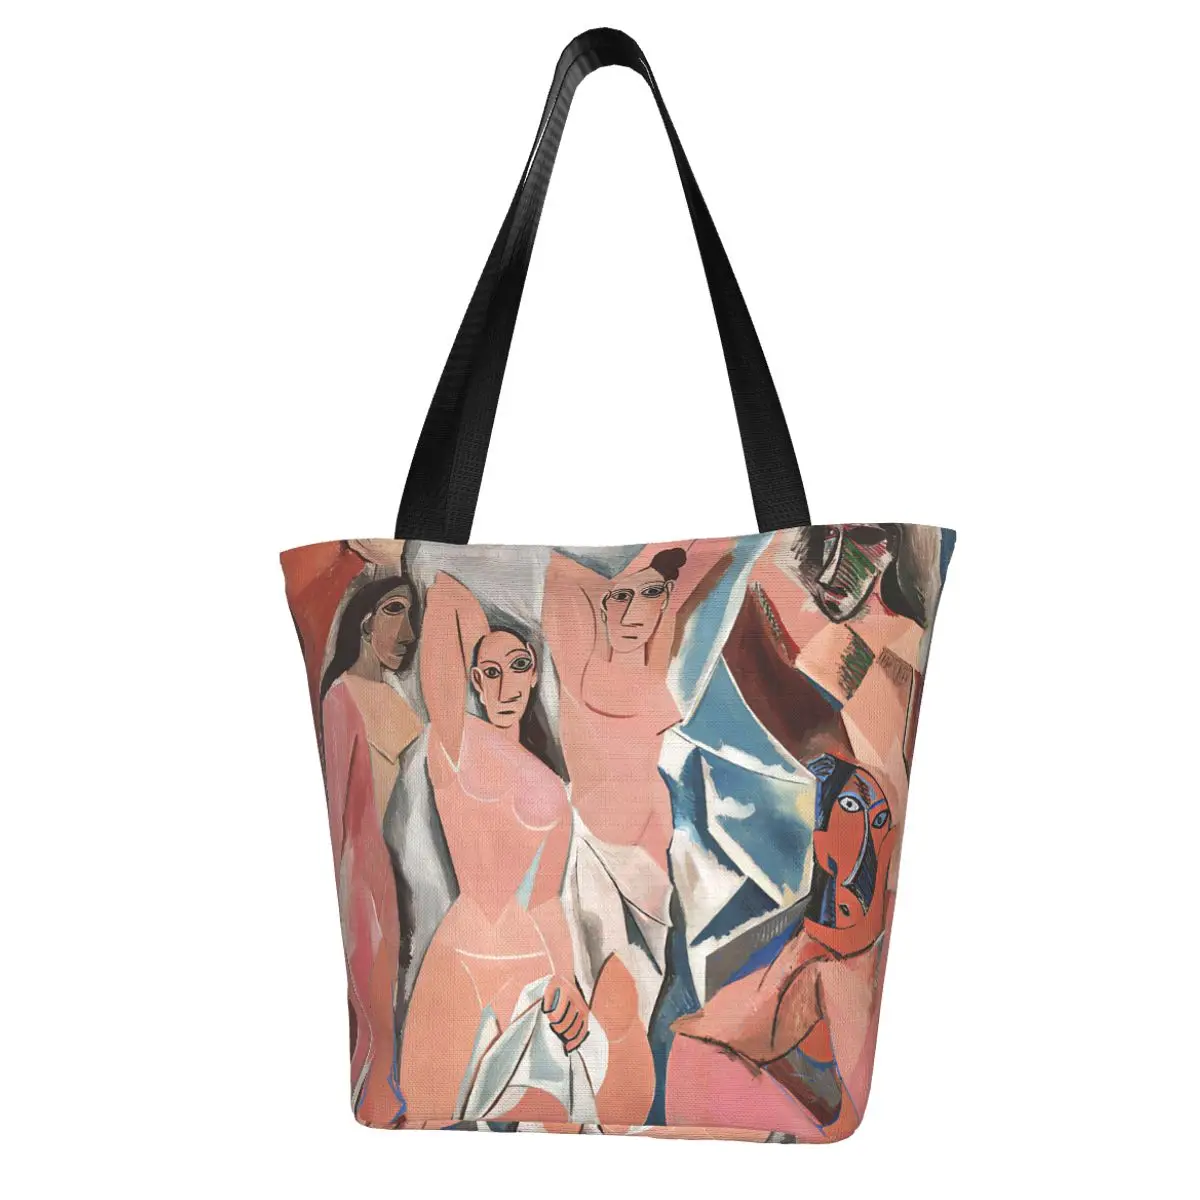 Pablo Picasso,Les Demoiselles D Avignon Shopping Bag Aesthetic Cloth Outdoor Handbag Female Fashion Bags